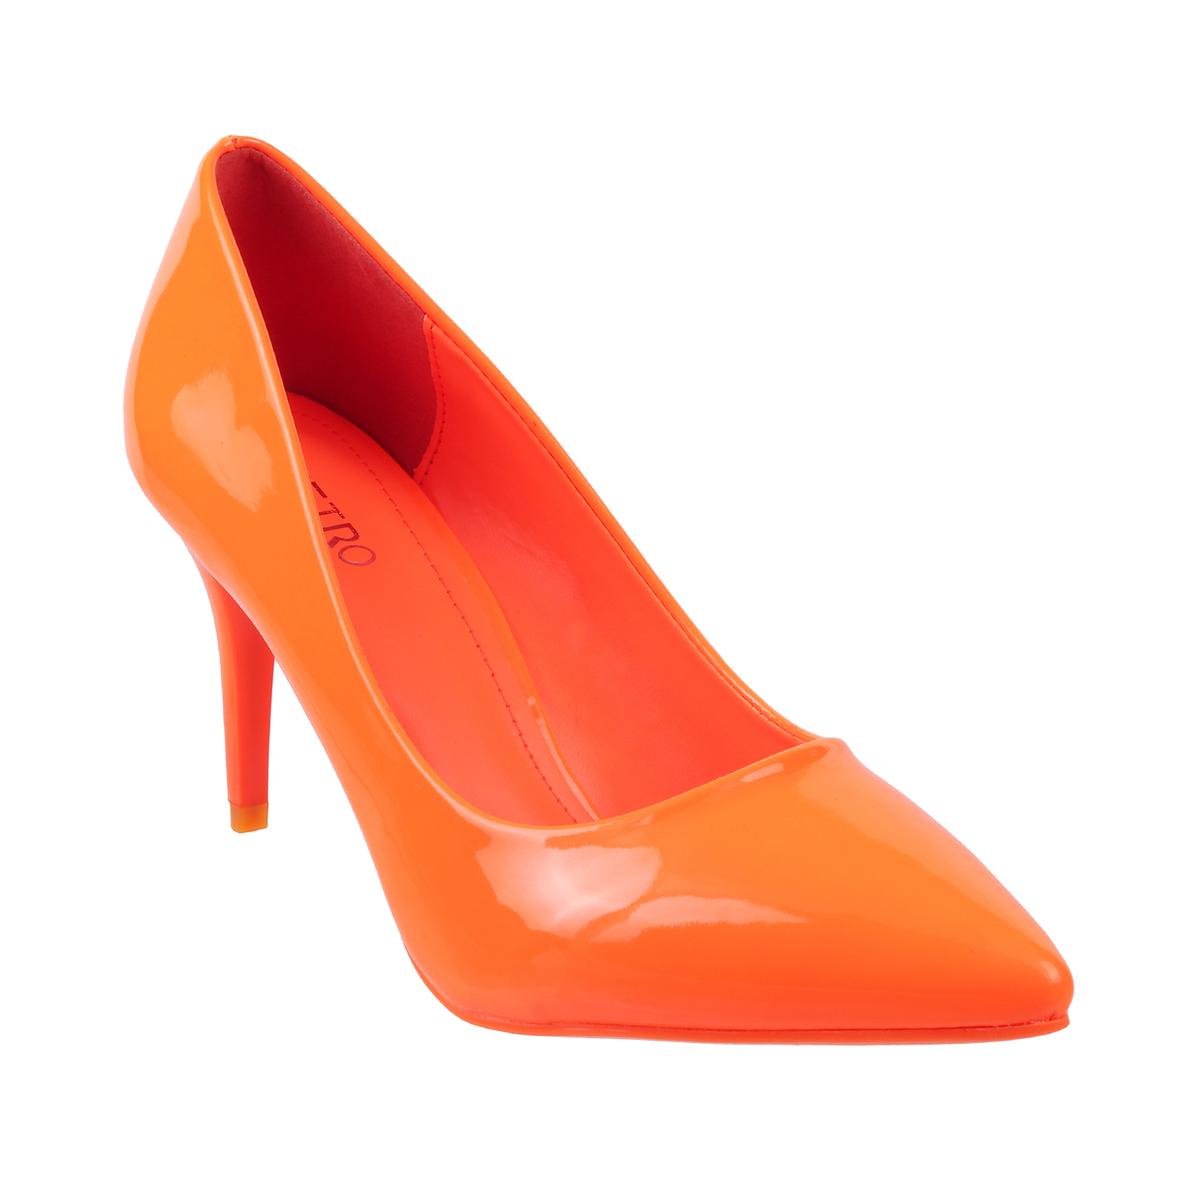 Italian Matching Shoes Bags Orange | African Wedding Shoes Bags Orange -  Coral-like - Aliexpress